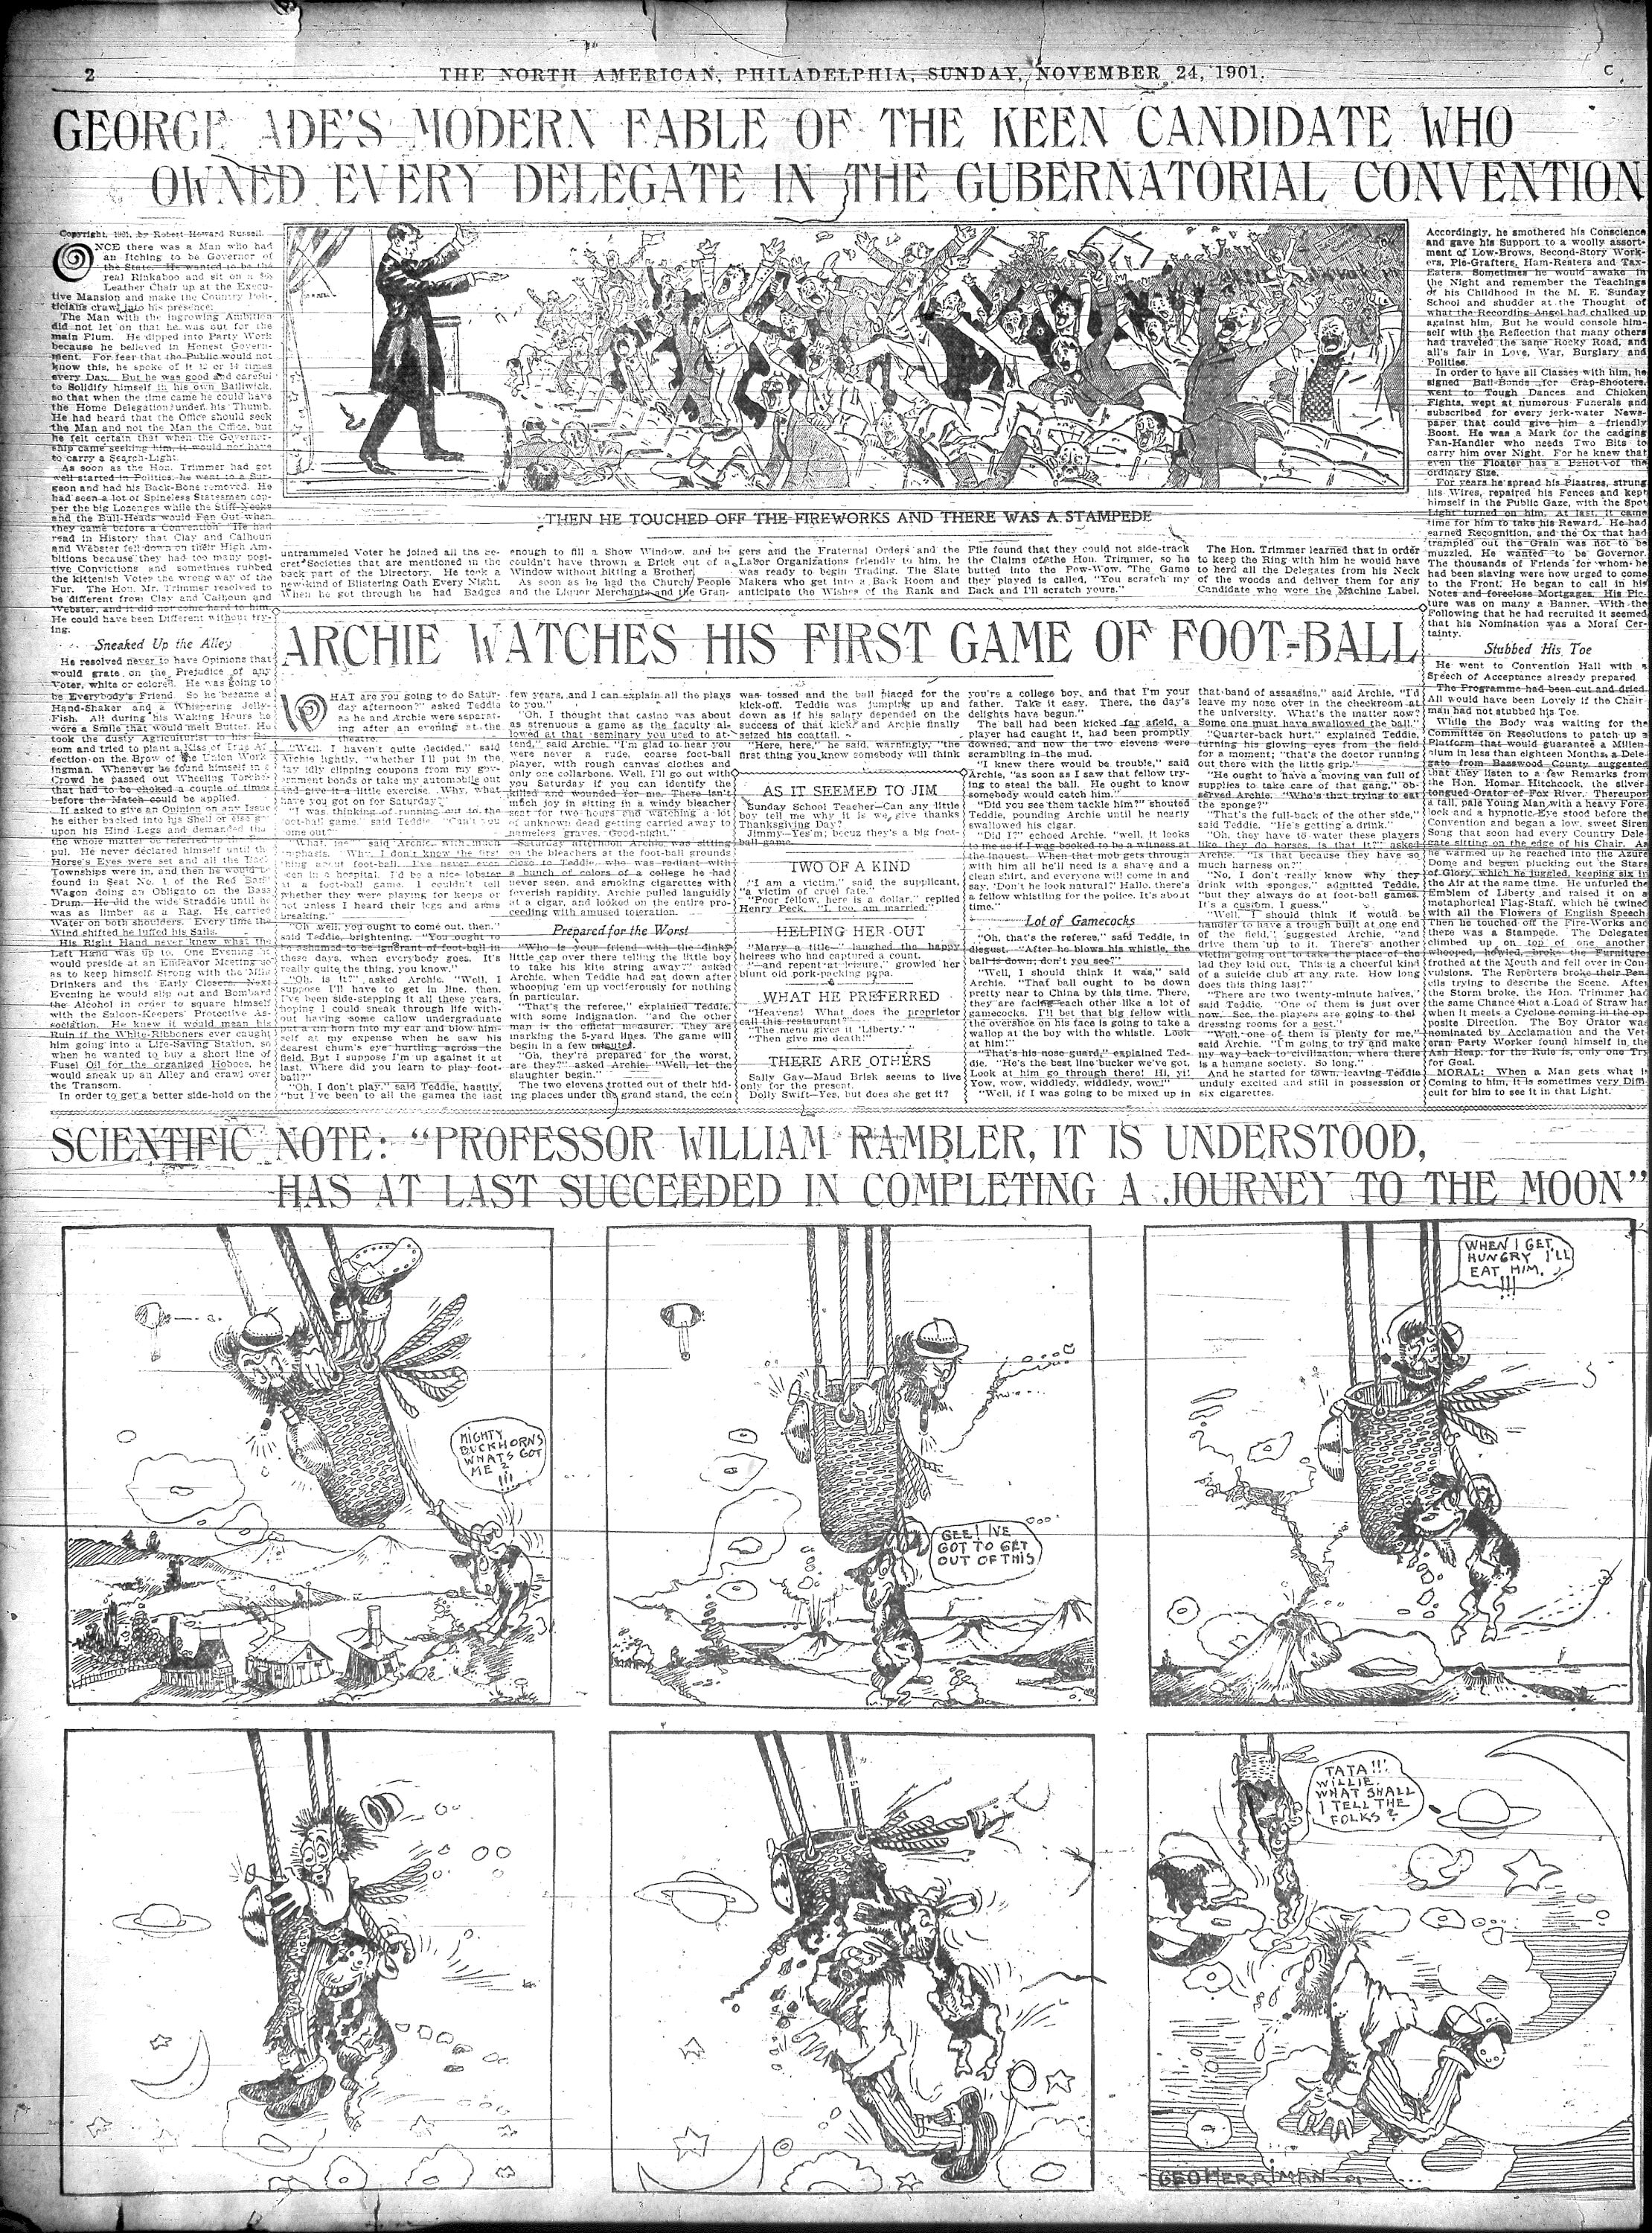 05-phillyna-11-24-1901-herriman-comic.jpg